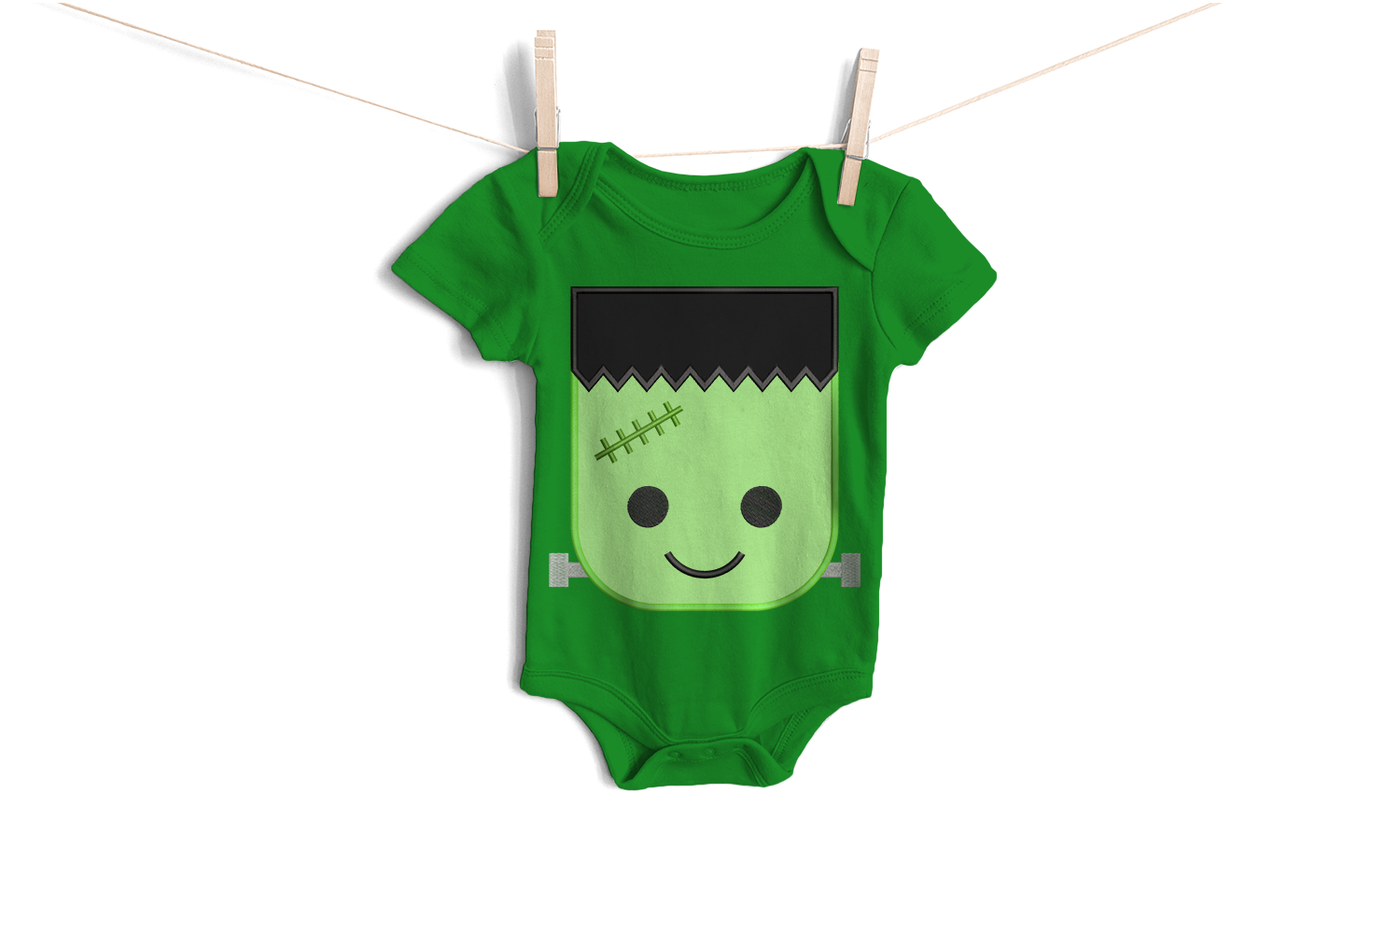 Cute Frankenstein's monster face on a green baby onesie